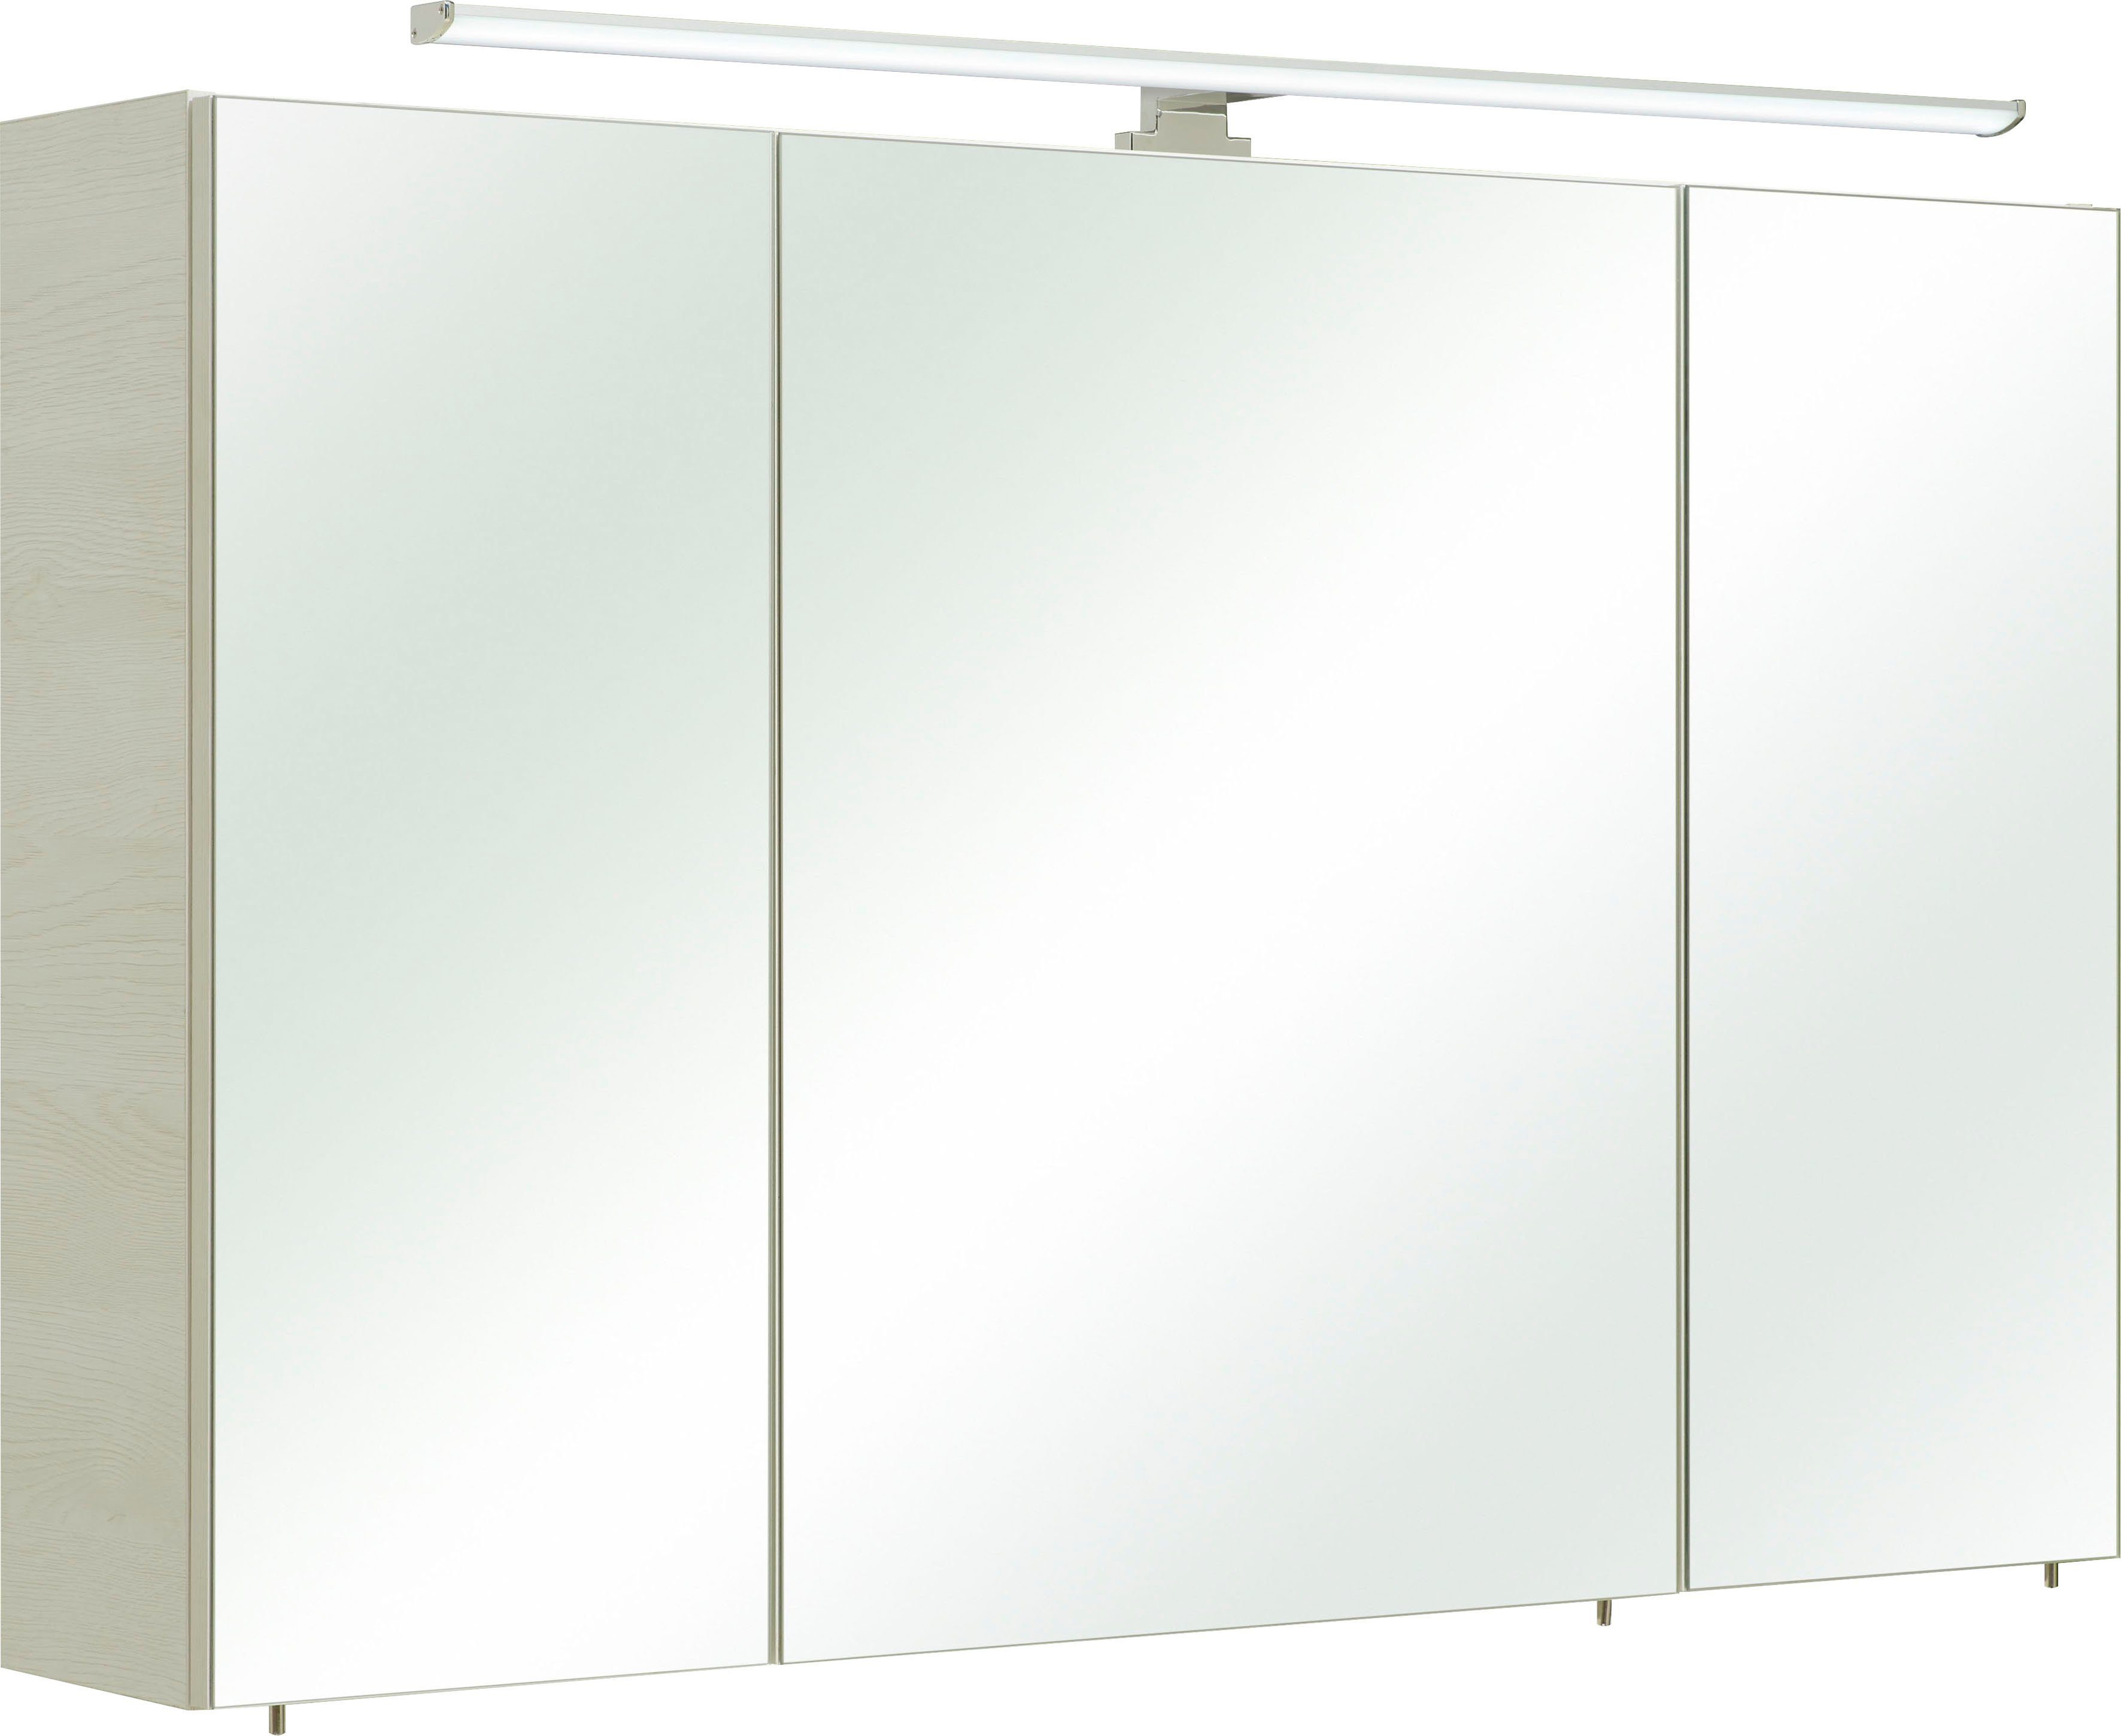 PELIPAL Spiegelschrank Quickset 936 Breite 110 cm, 3-türig, LED-Beleuchtung,  Schalter-/Steckdosenbox